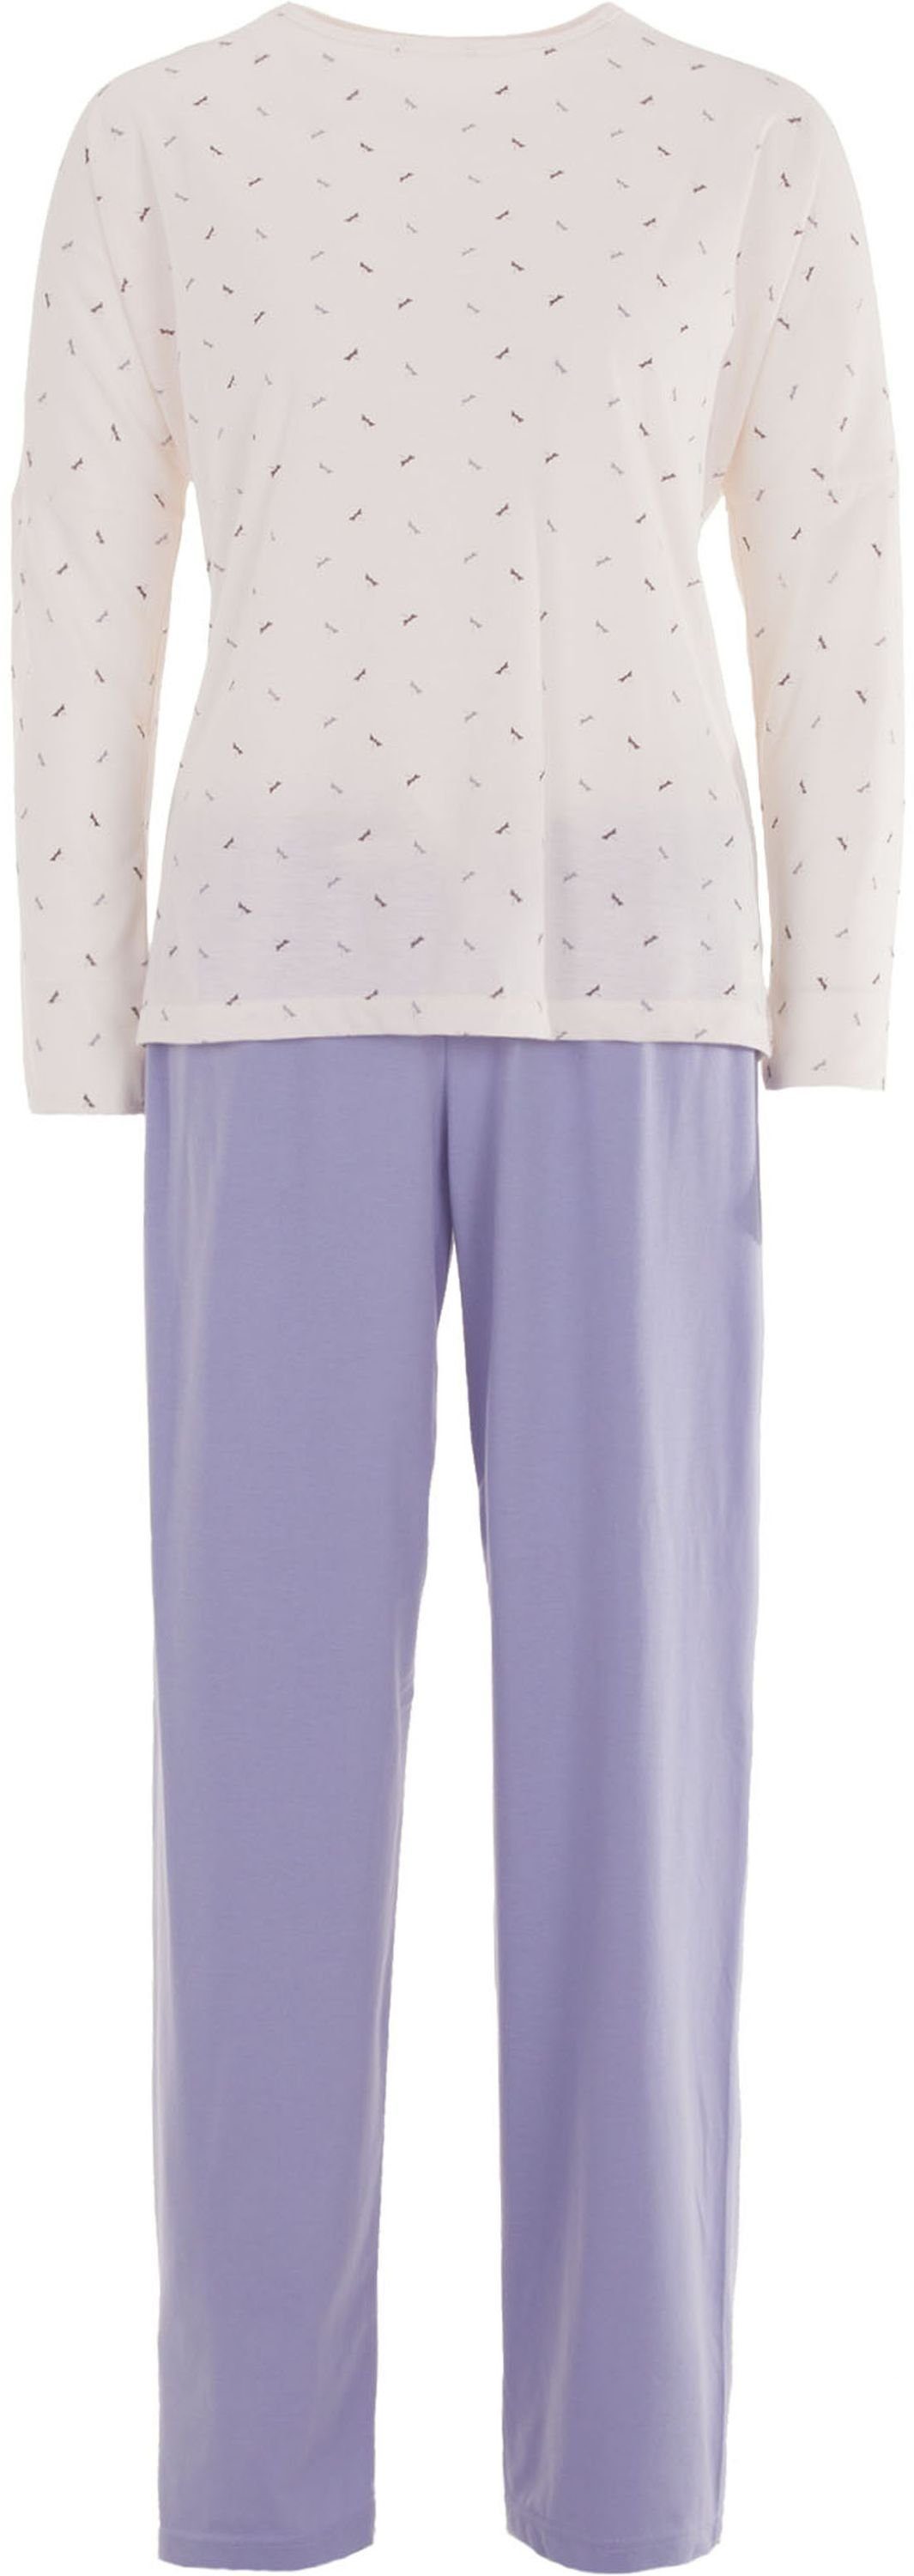 zeitlos Schlafanzug Pyjama Set Langarm - Libelle flieder